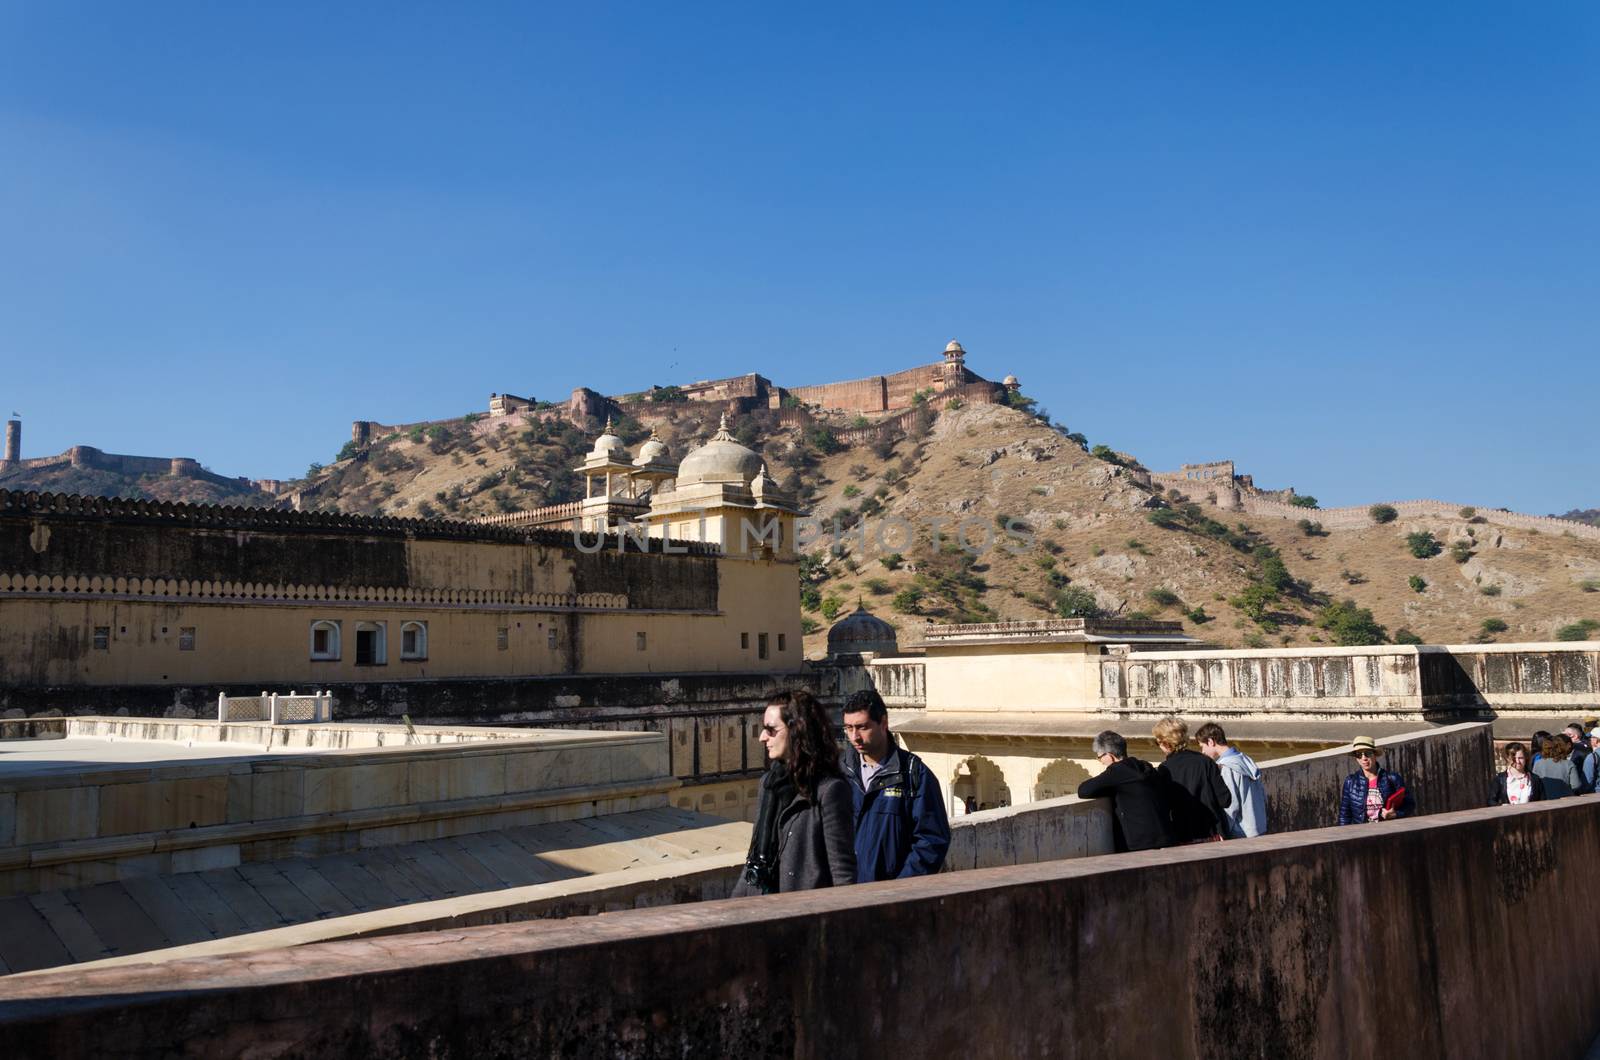 Jaipur, India - December 29, 2014: Tourists visit Amber Fort near Jaipur, Rajasthan, India on December29, 2014. The Fort was built by Raja Man Singh I.